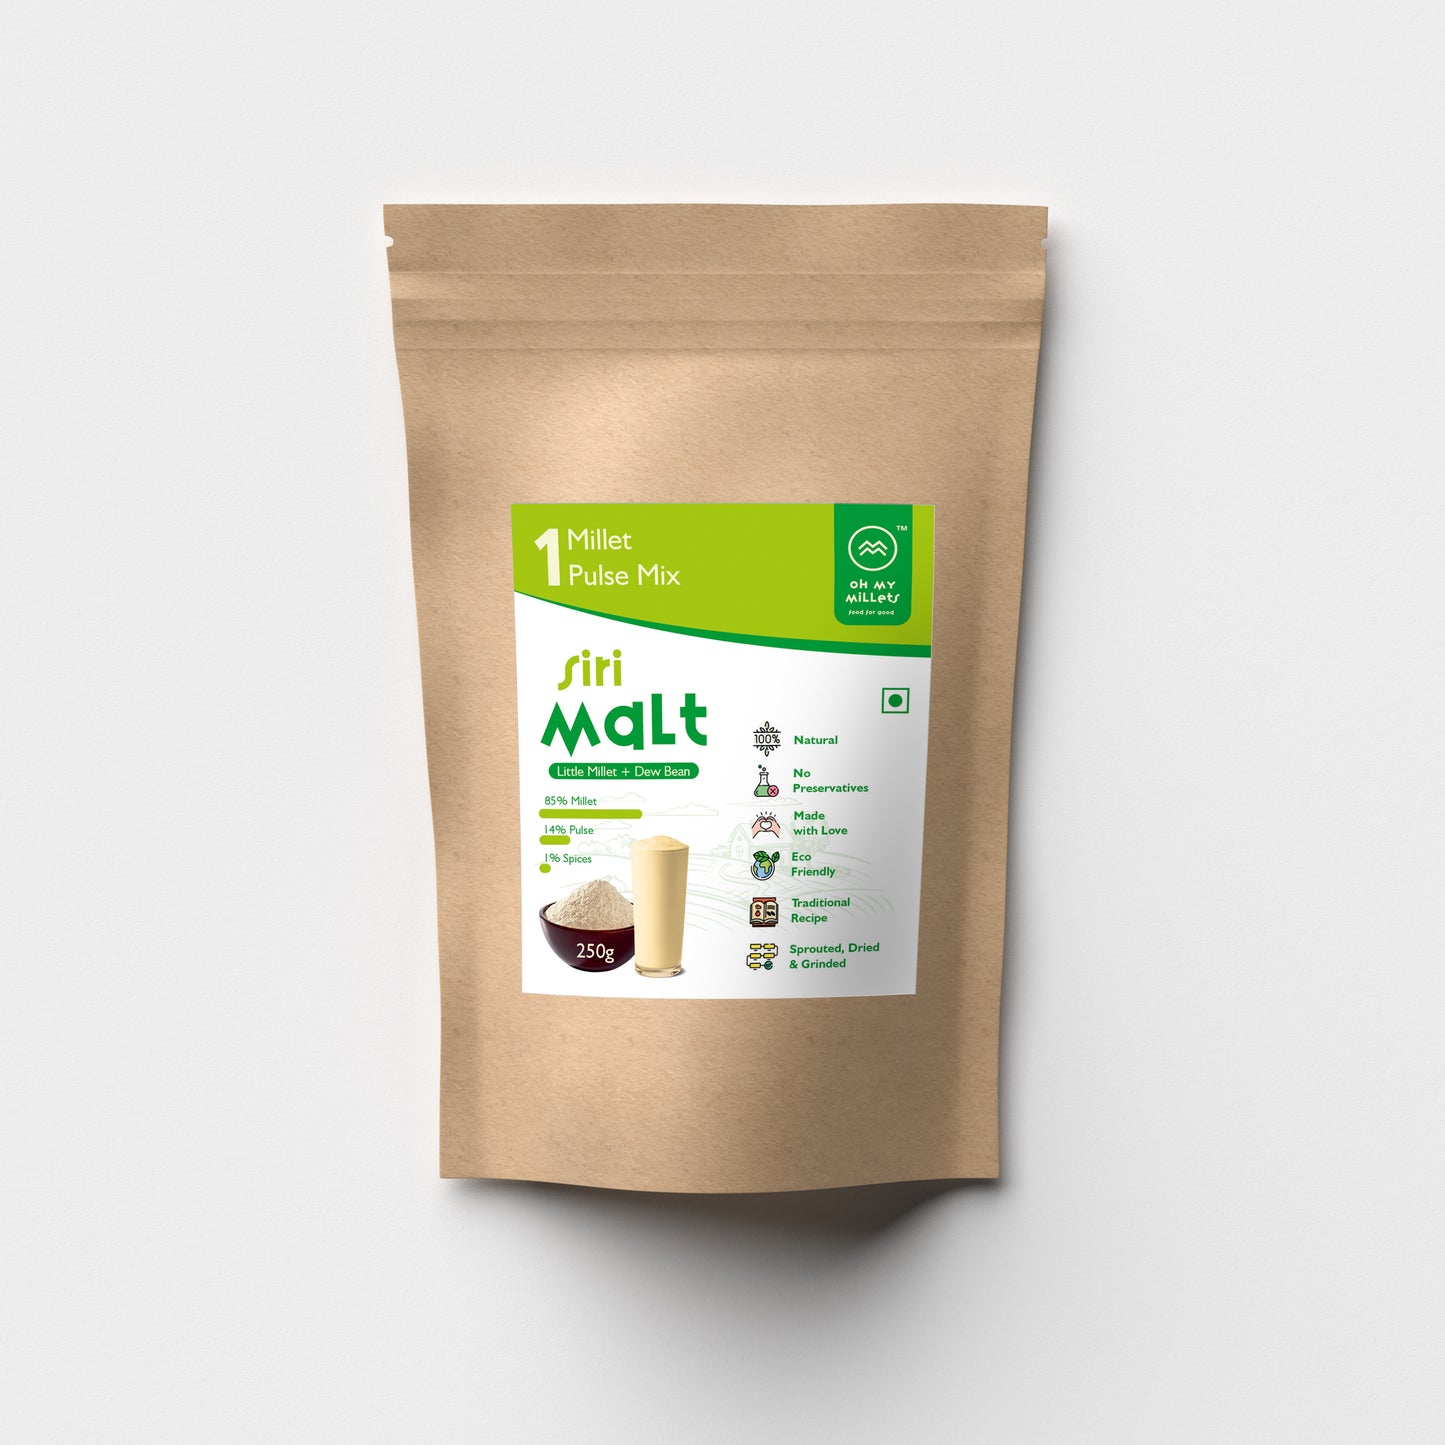 Siri Malt - Little Millet